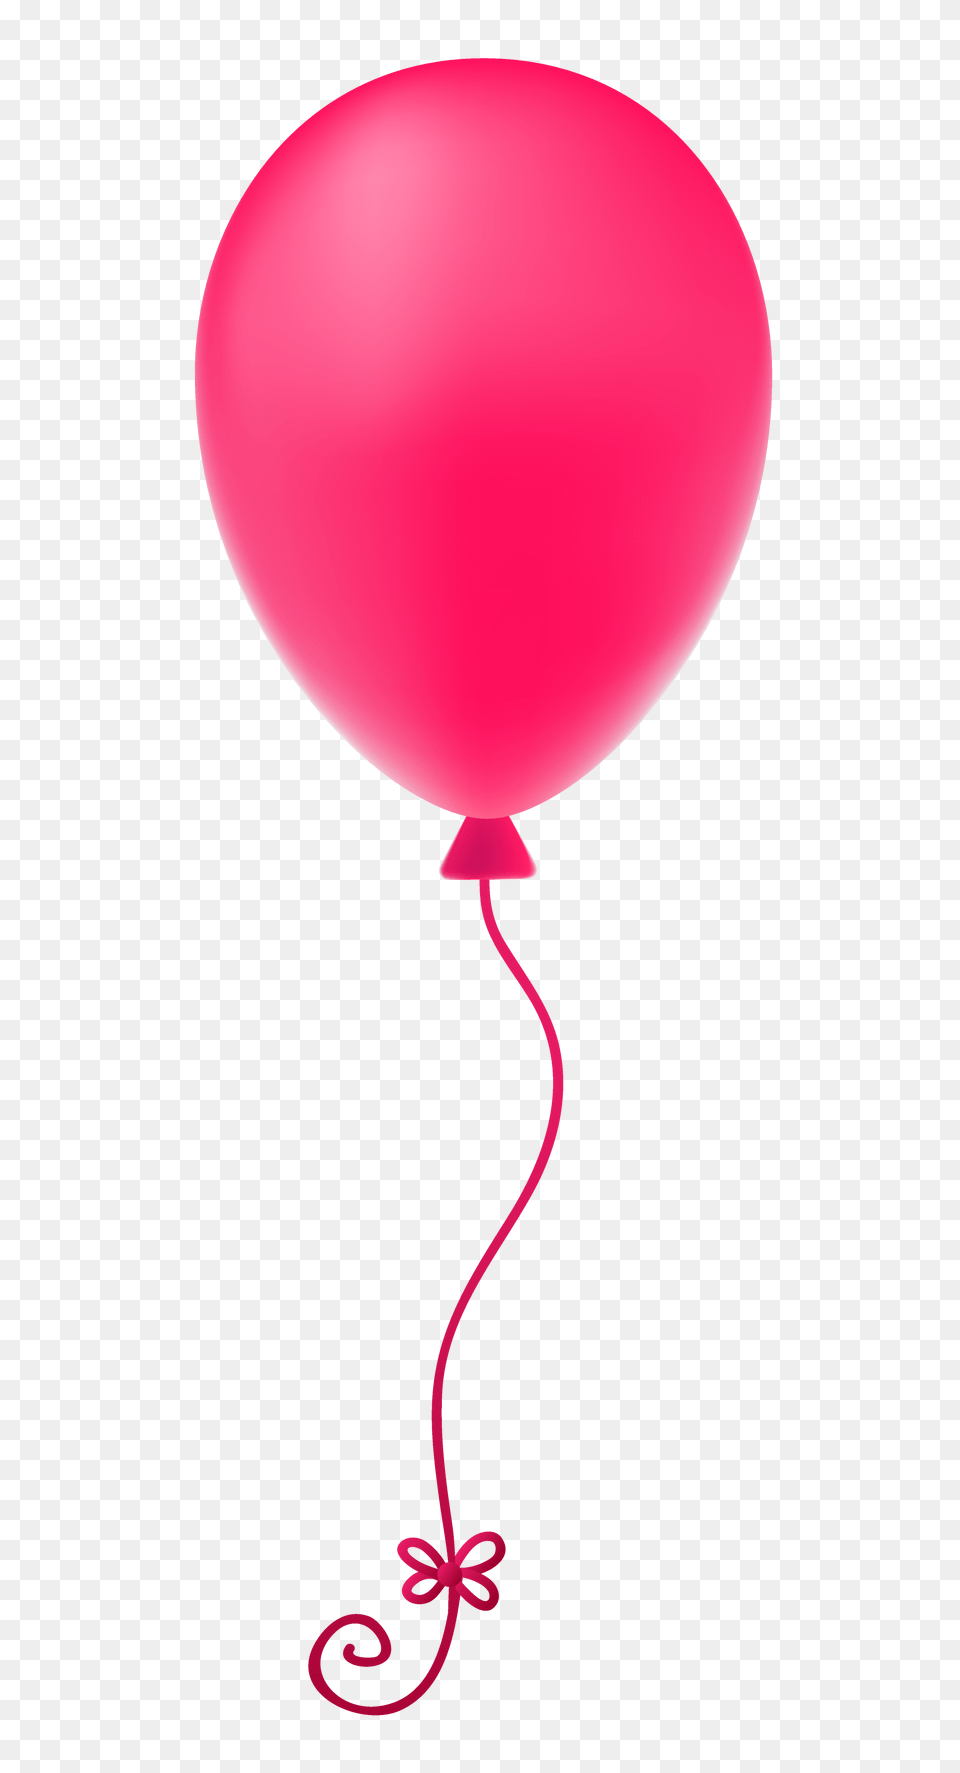 Pngpix Com Pink Balloon Png Image